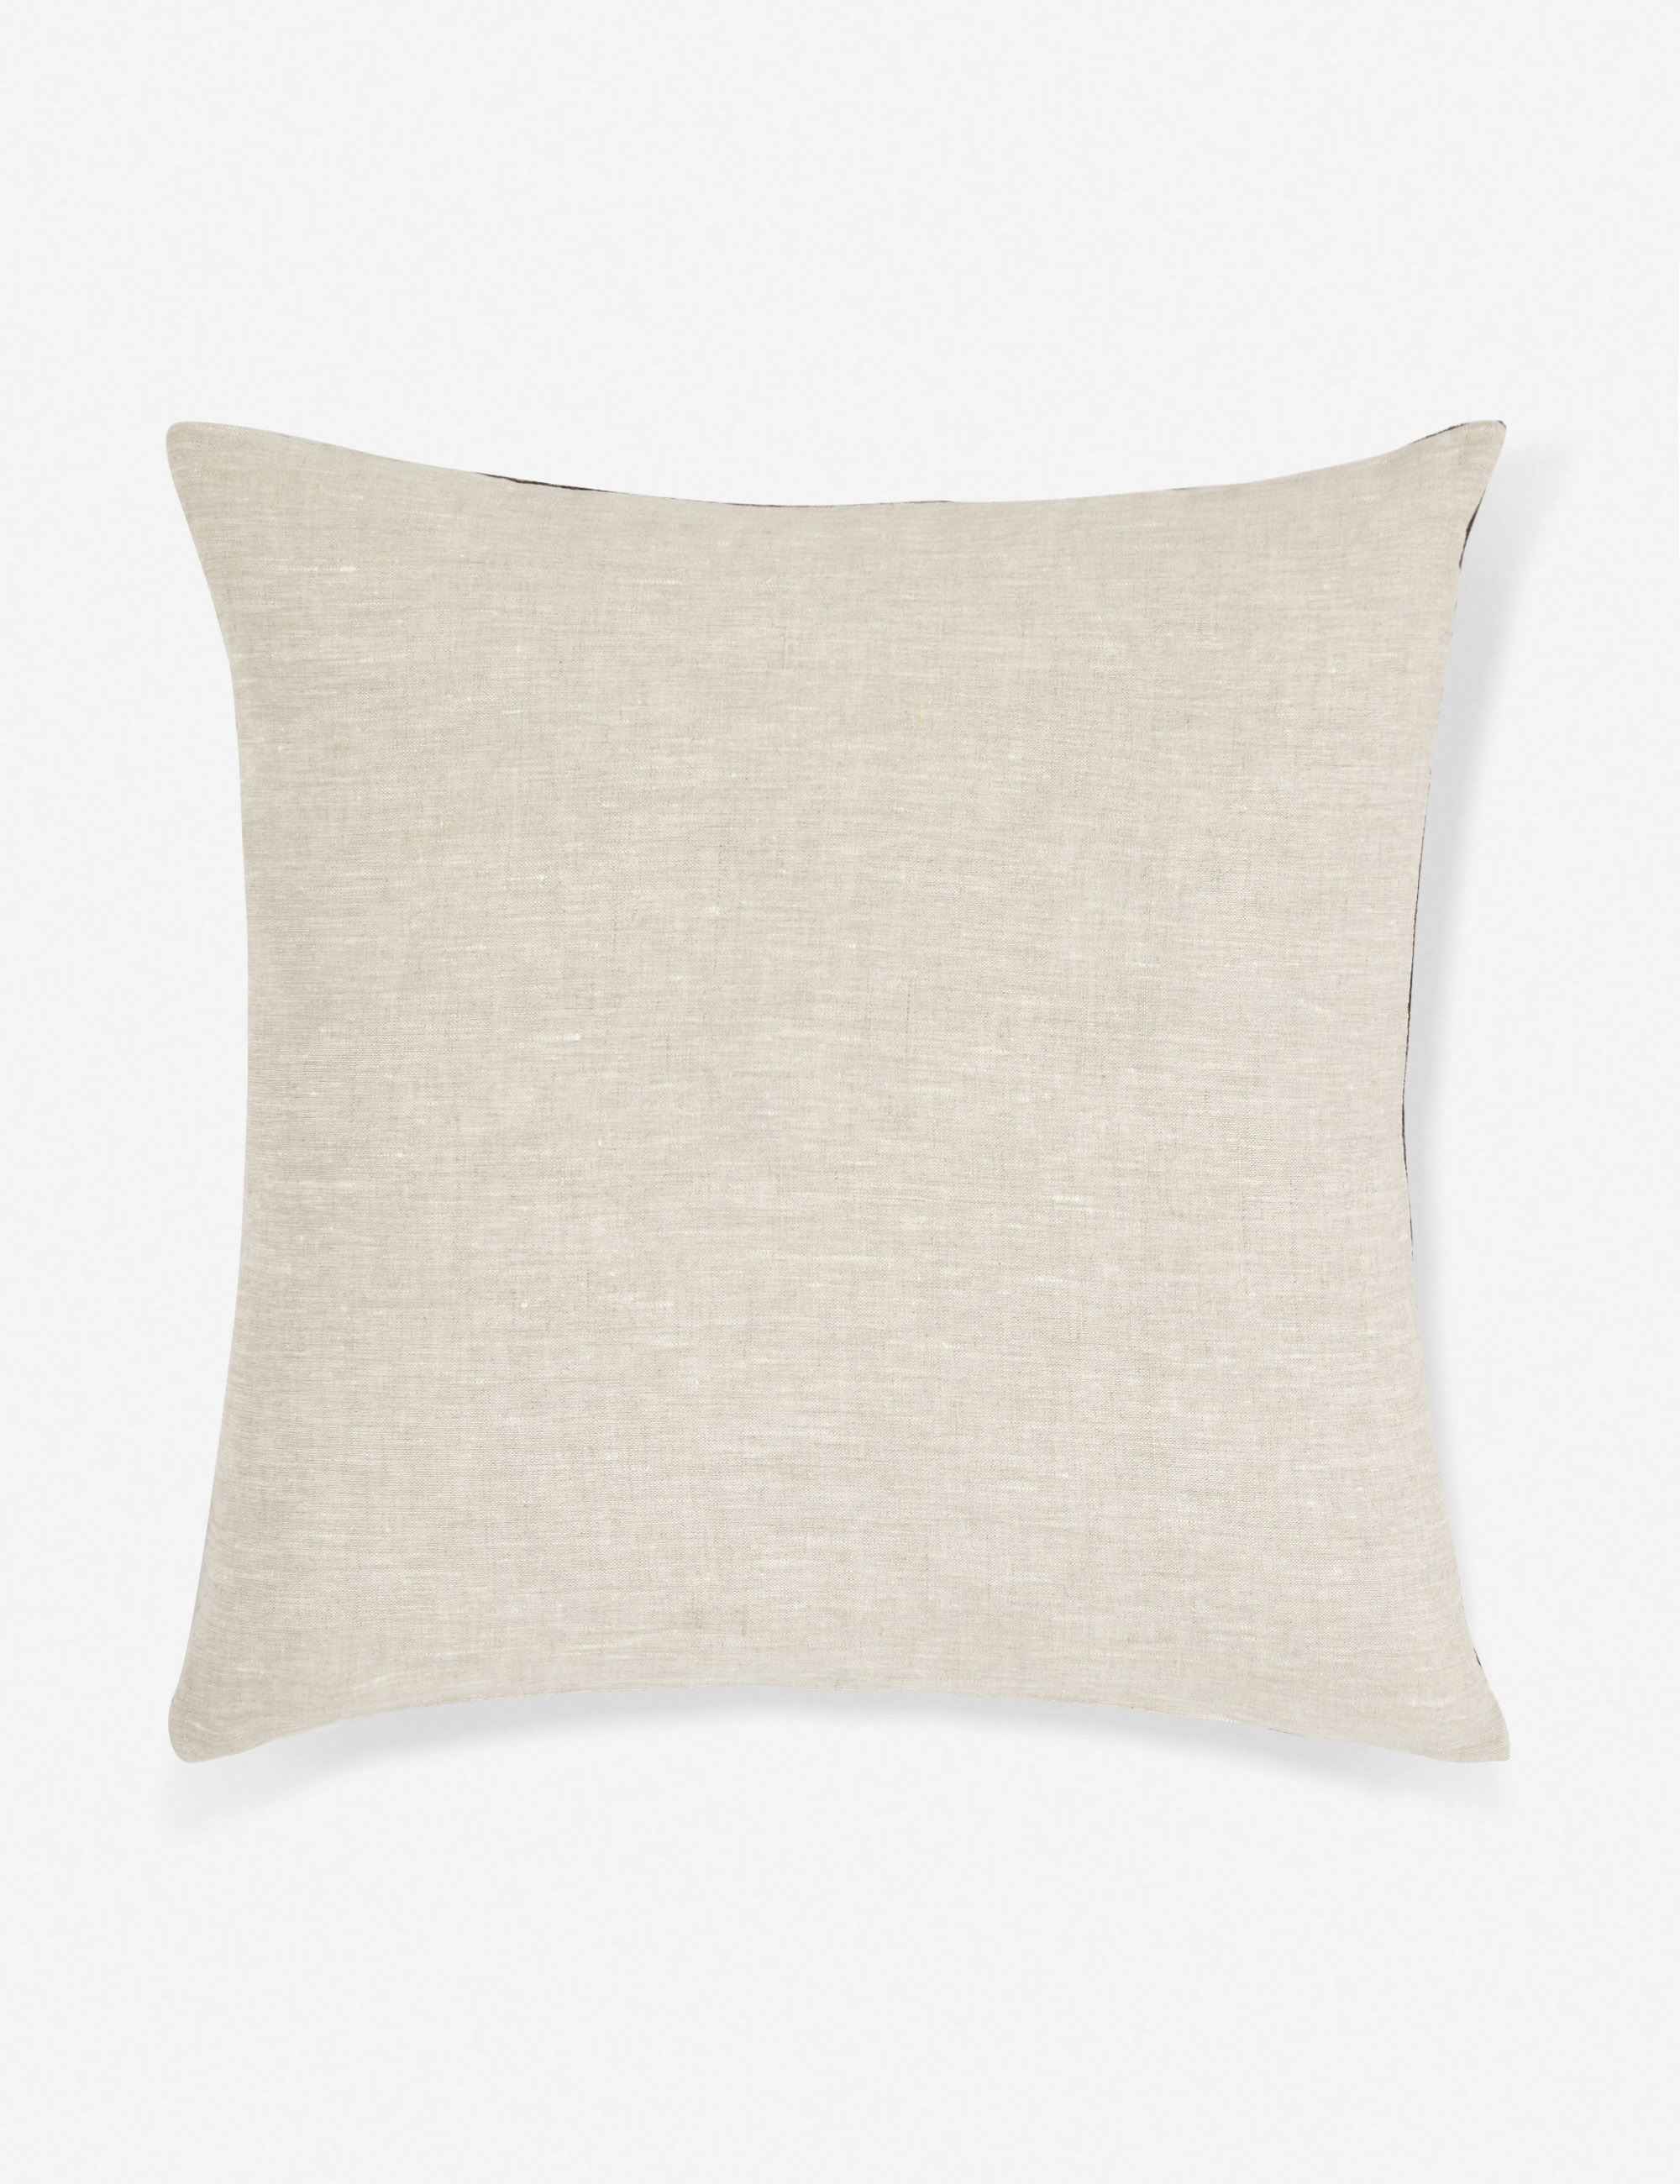 Rainey Mudcloth Pillow, Black - Image 1